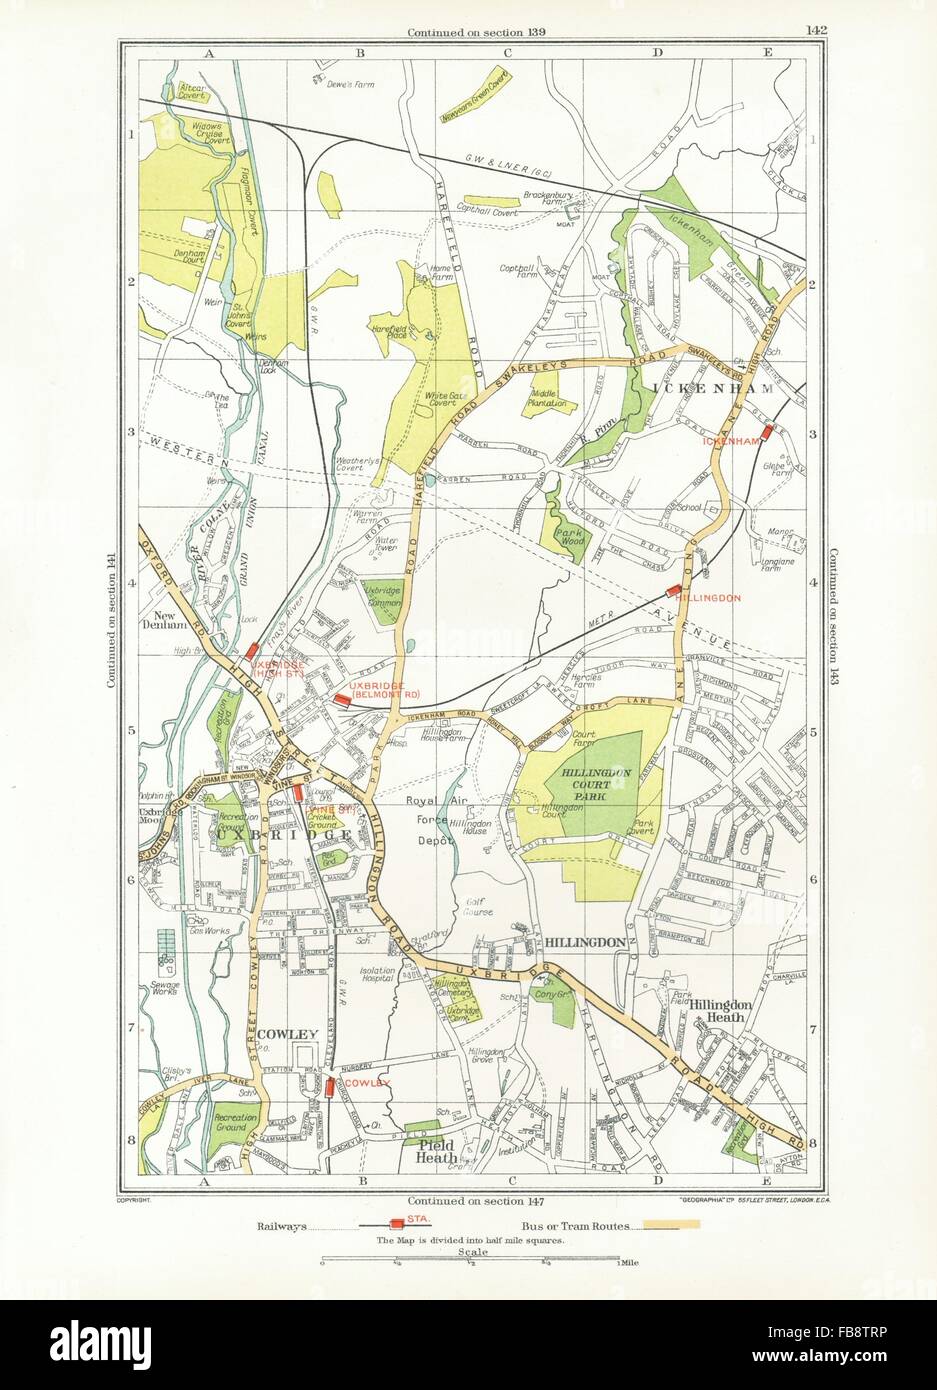 UXBRIDGE. Ickenham, Hillingdon, Ruislip, Cowley, New Denham, 1933 vintage map Stock Photo